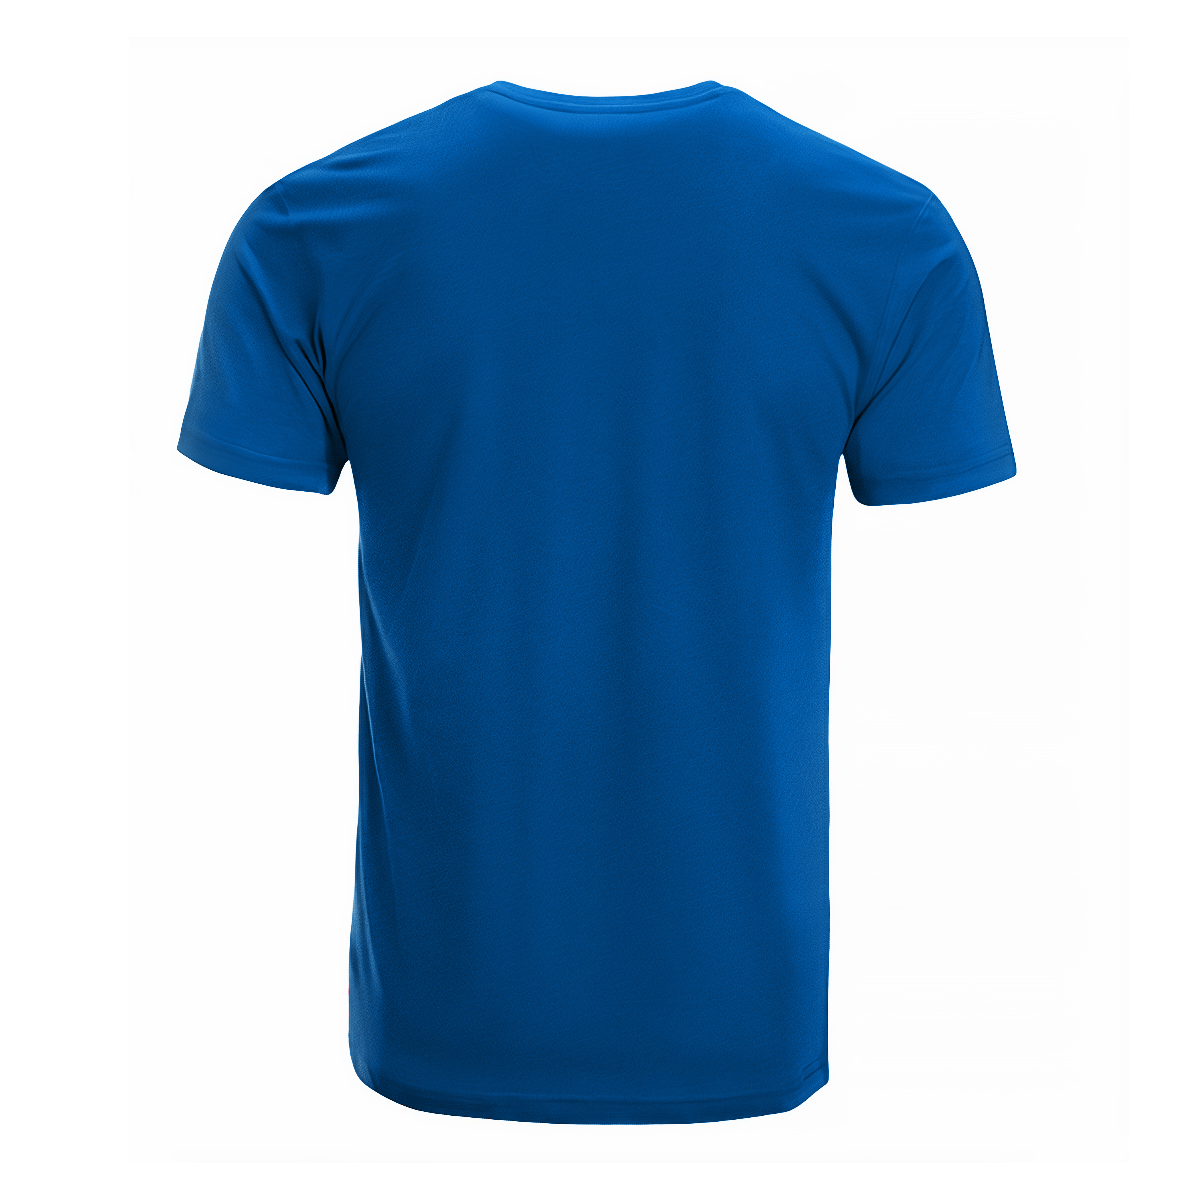 Roberts Tartan Crest T-shirt - I'm not yelling style